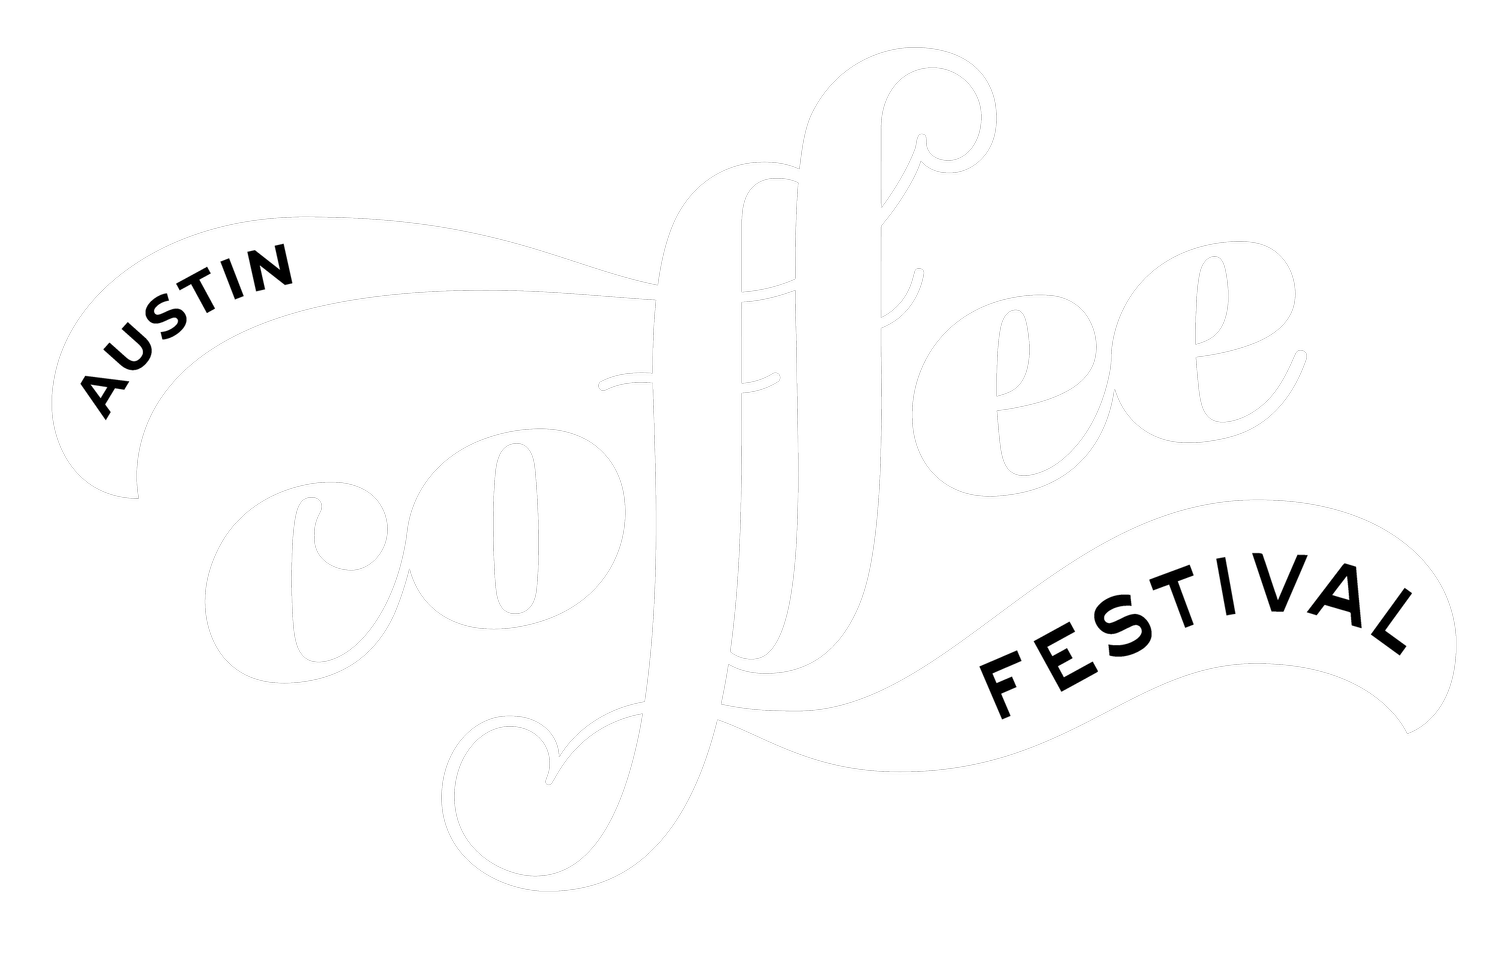 Austin Coffee Festival